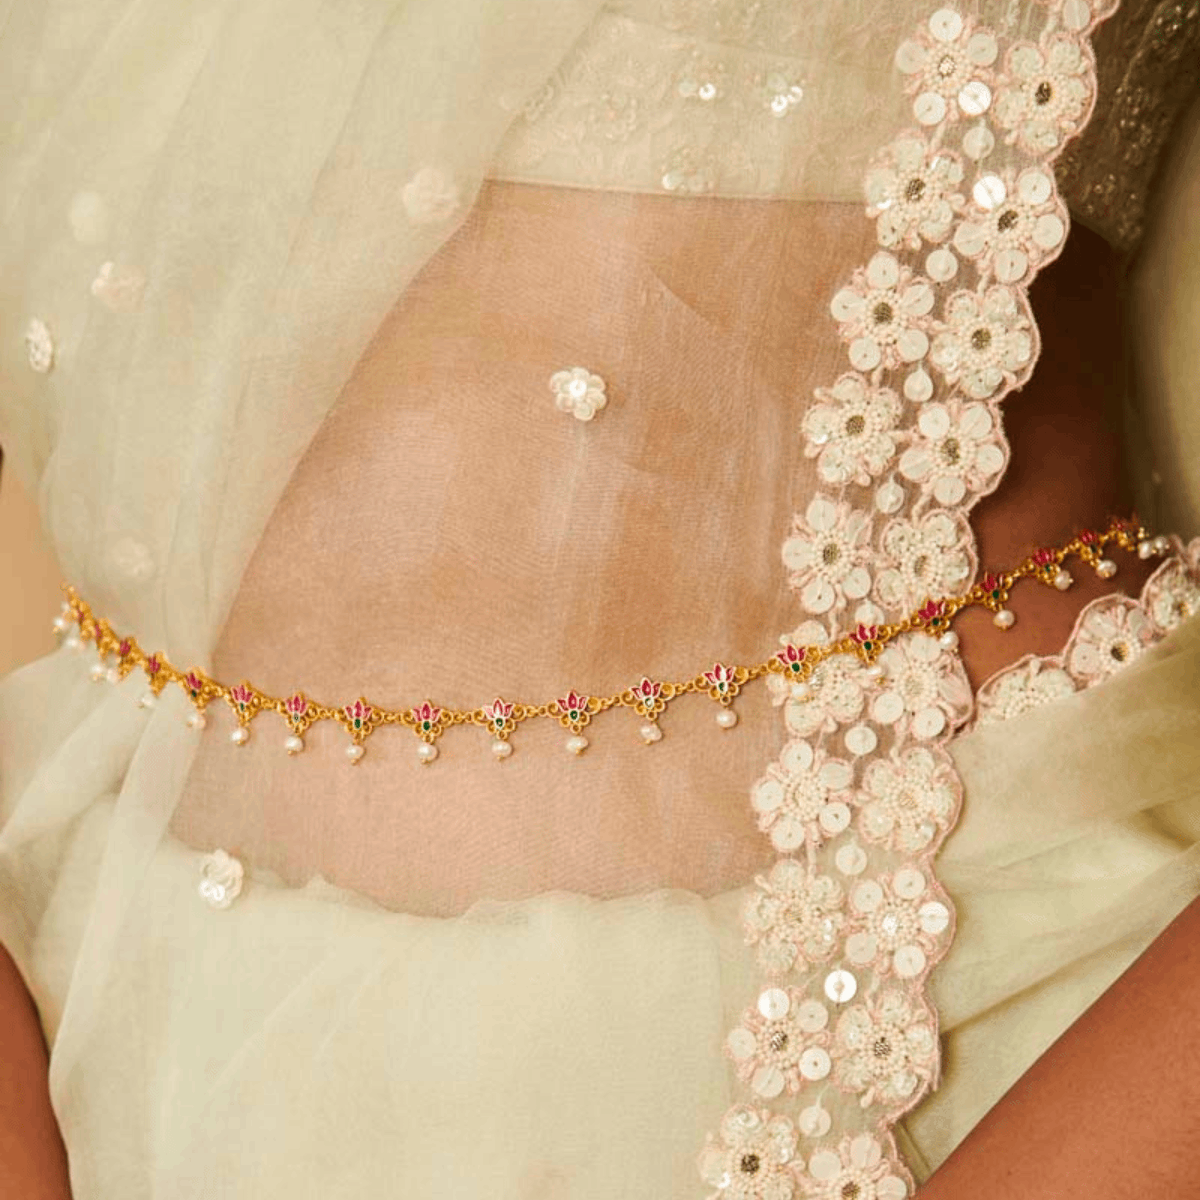 Threads of Lotus Delicate Waistbelt in Pink Enamel